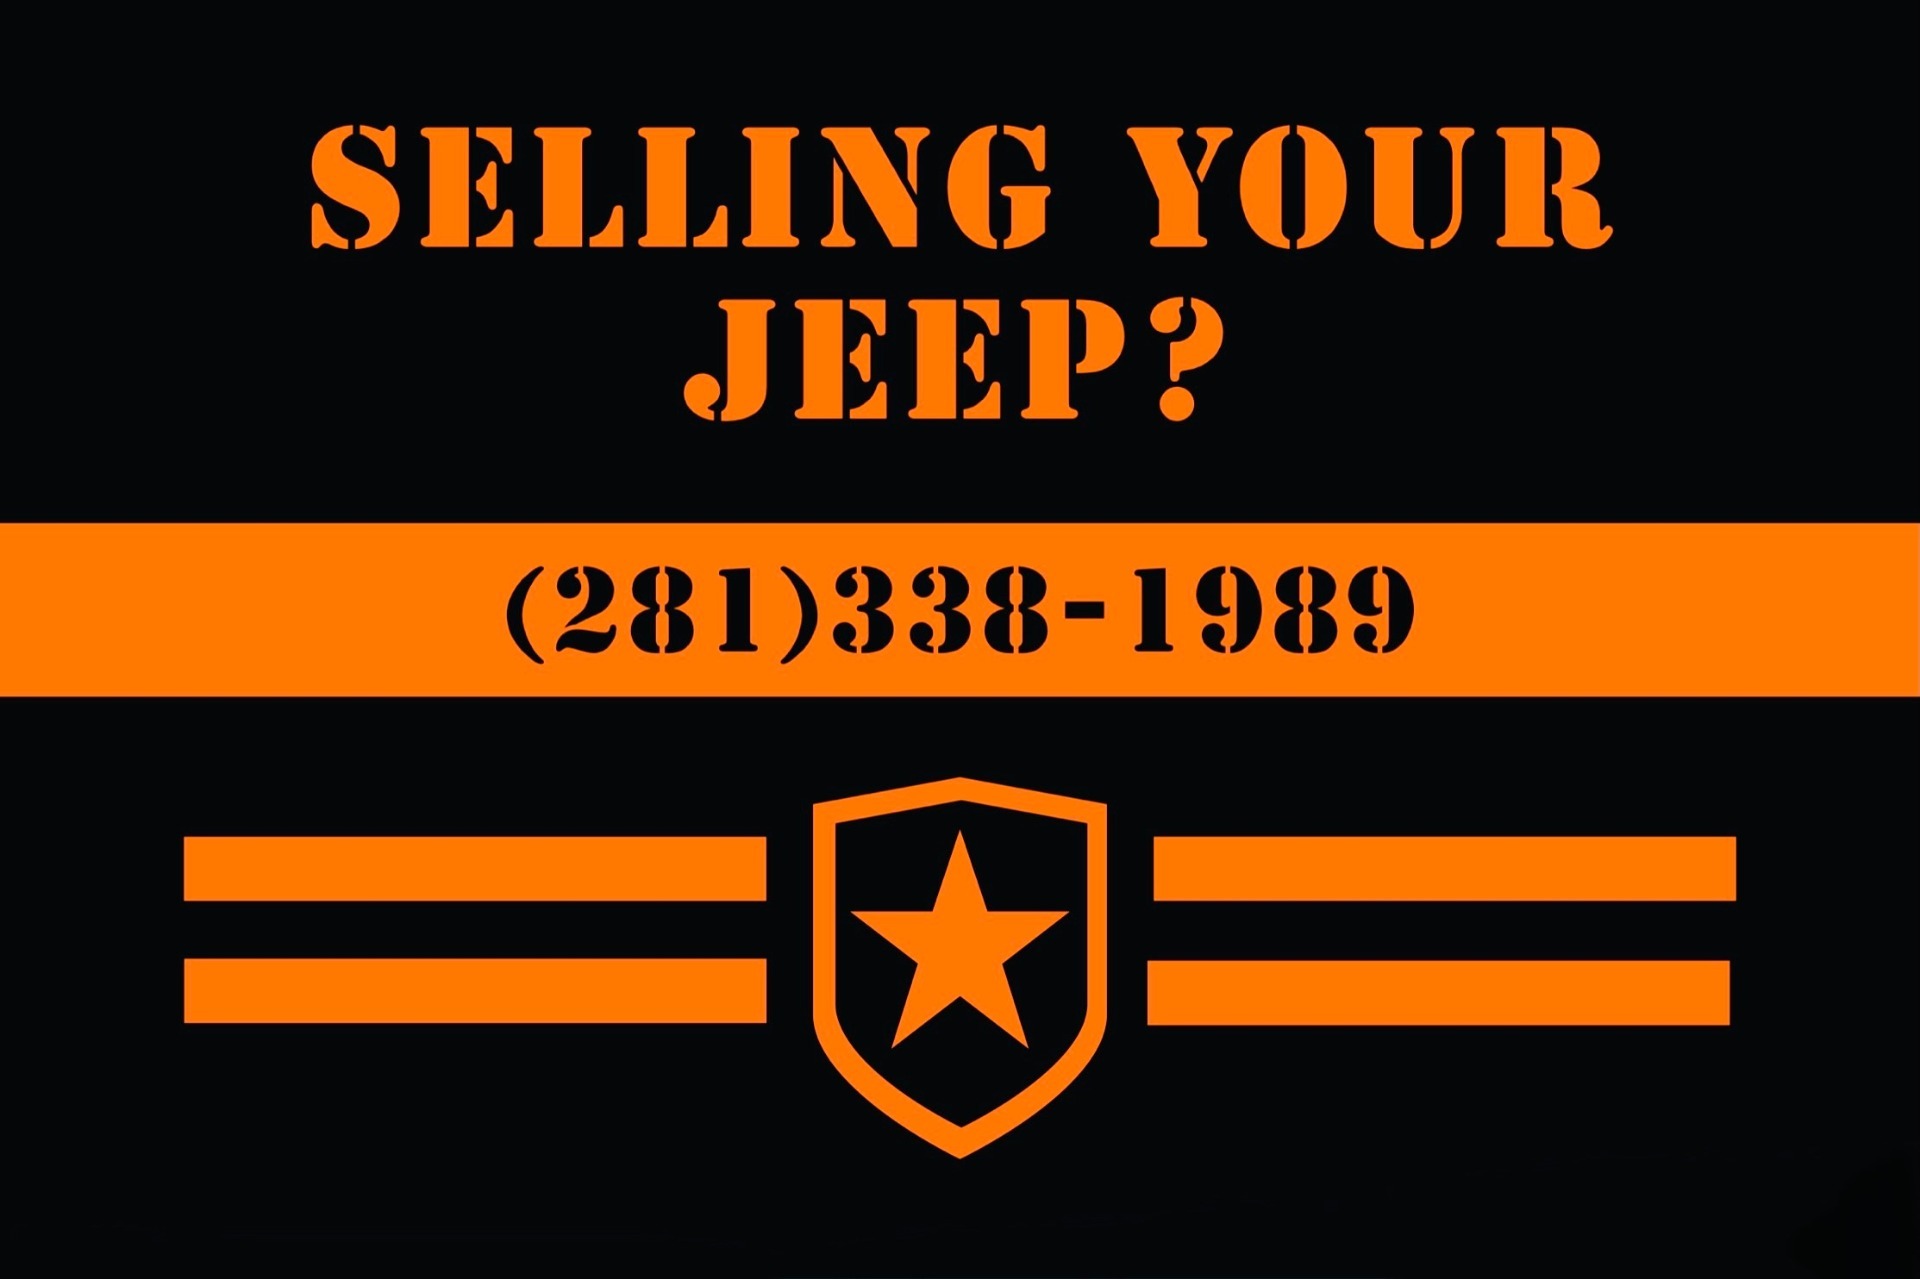 Used 2010 Jeep Wrangler Sahara For Sale (23,995) Select